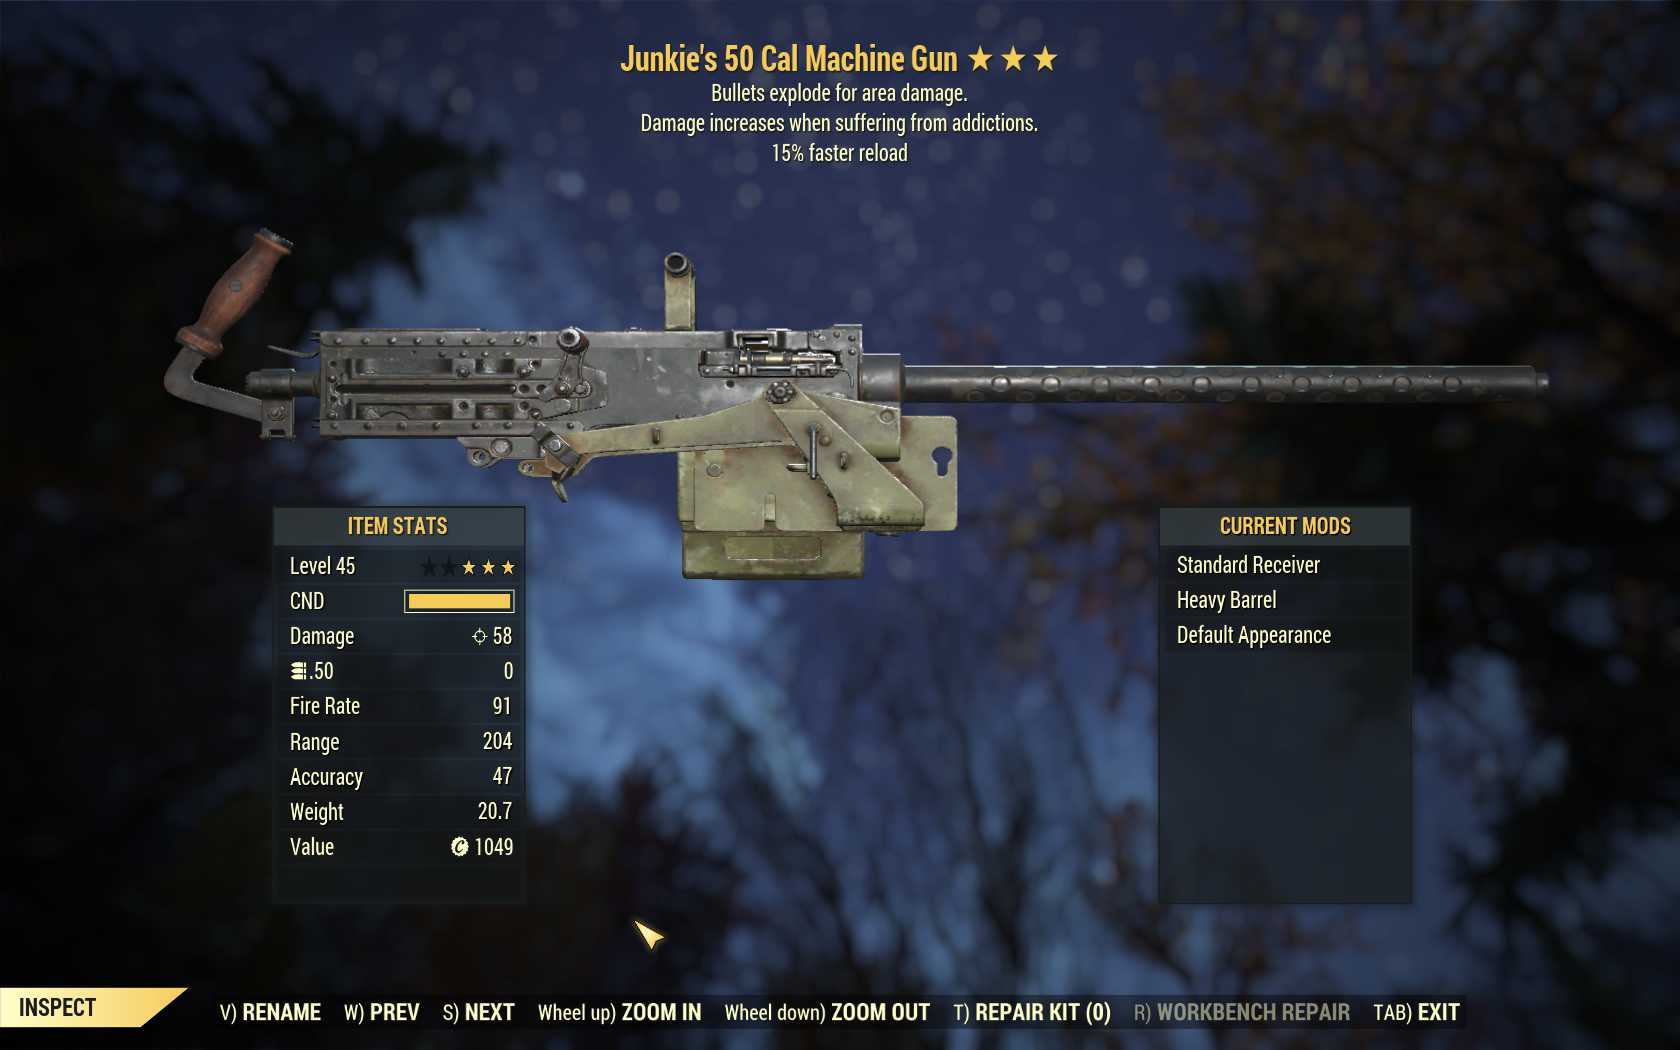 Junkie's 50 Cal Machine Gun (25% faster fire rate, 15% faster reload)